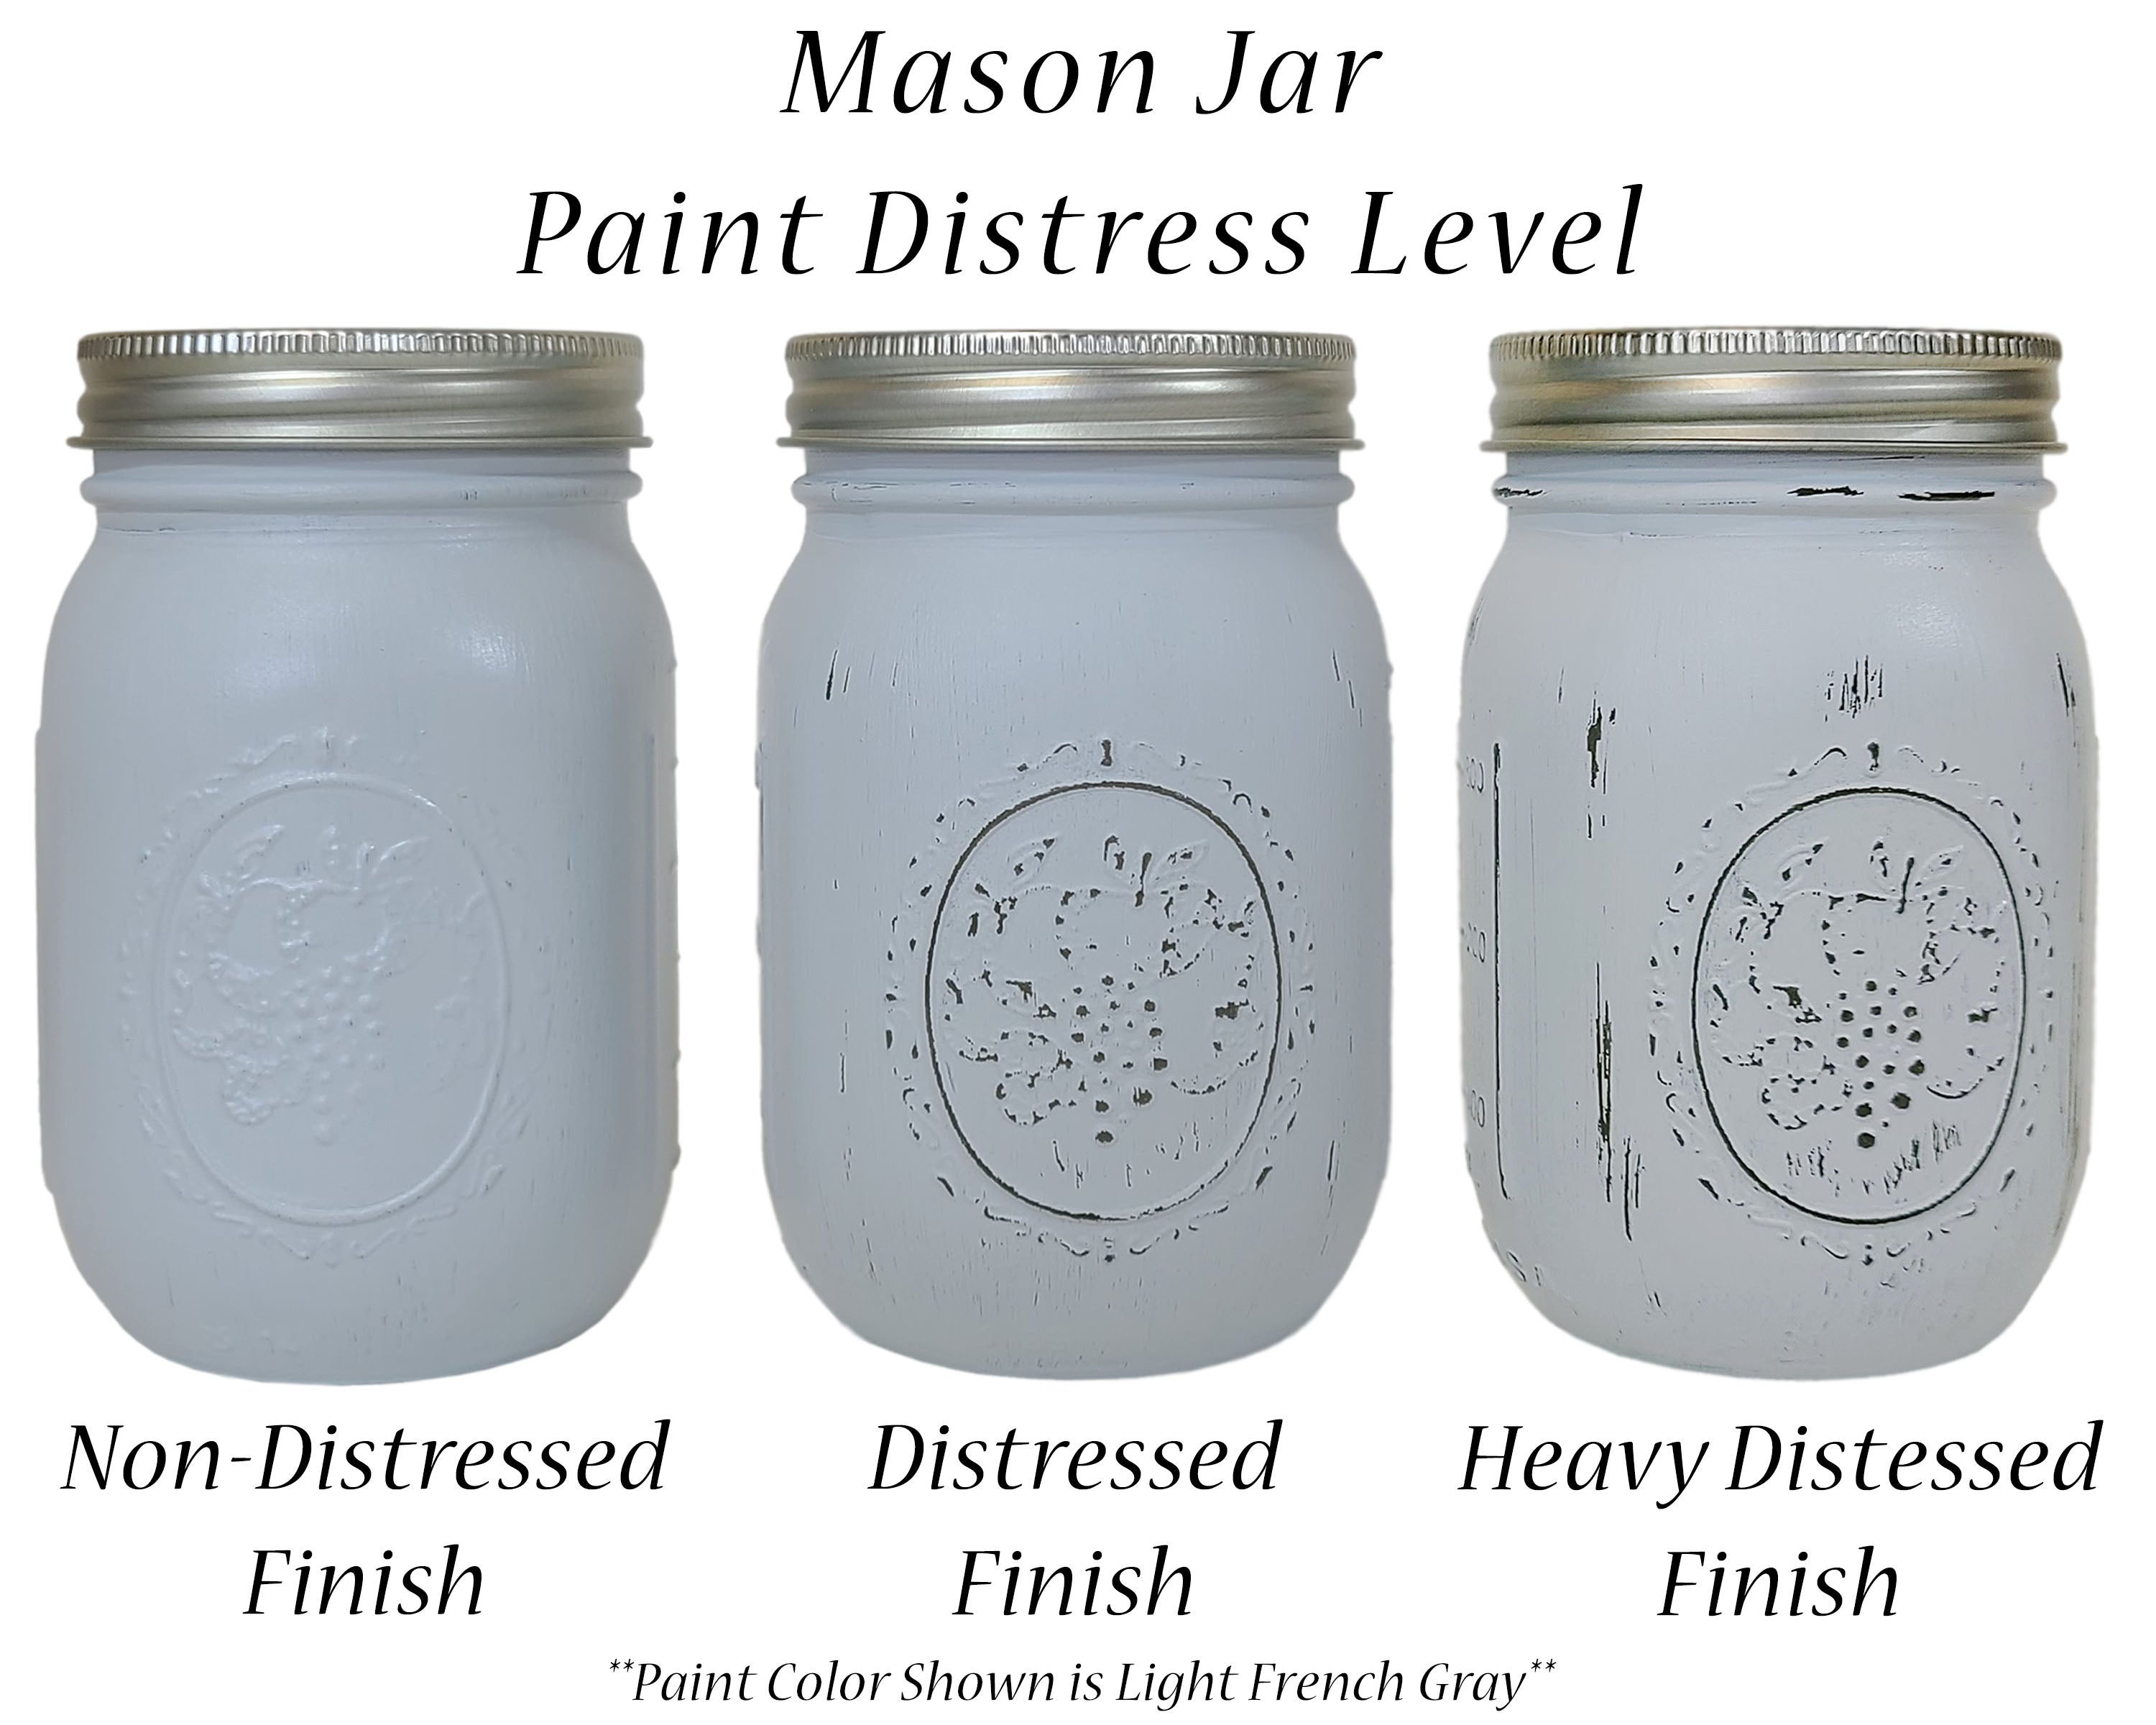 Mason Jar Paint Distress Levels